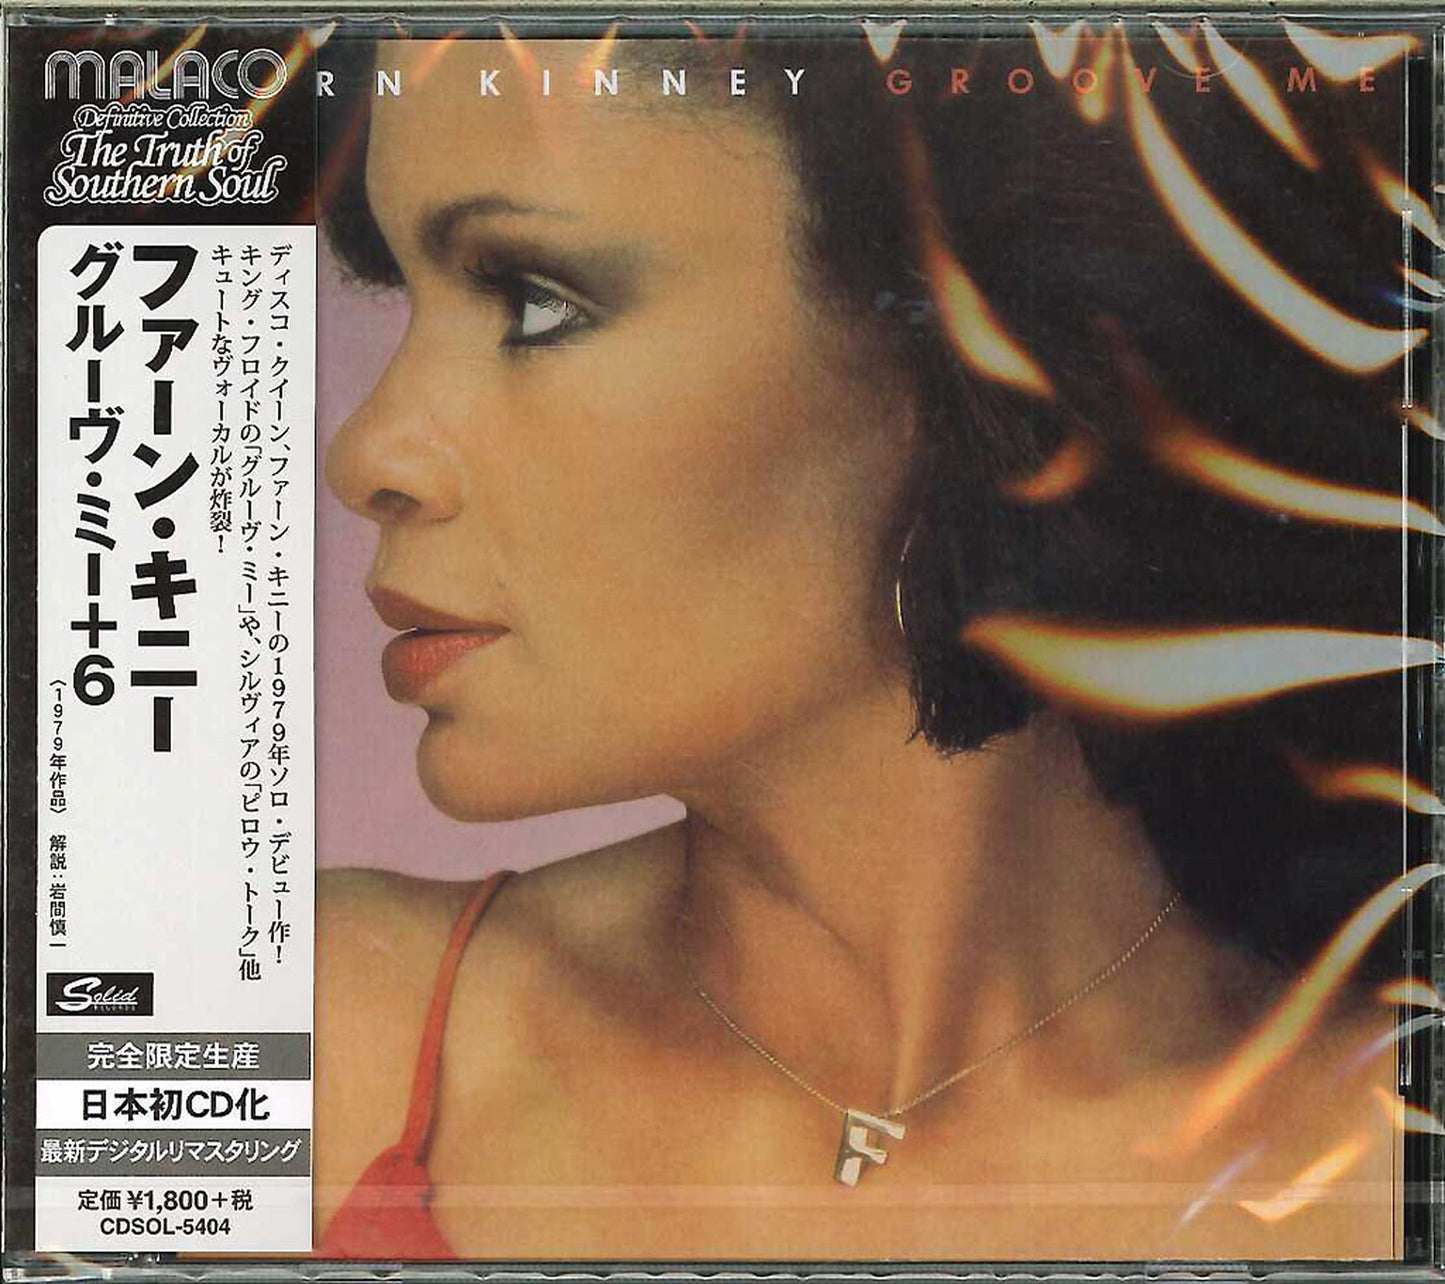 Fern Kinney - Groove Me - Japan CD